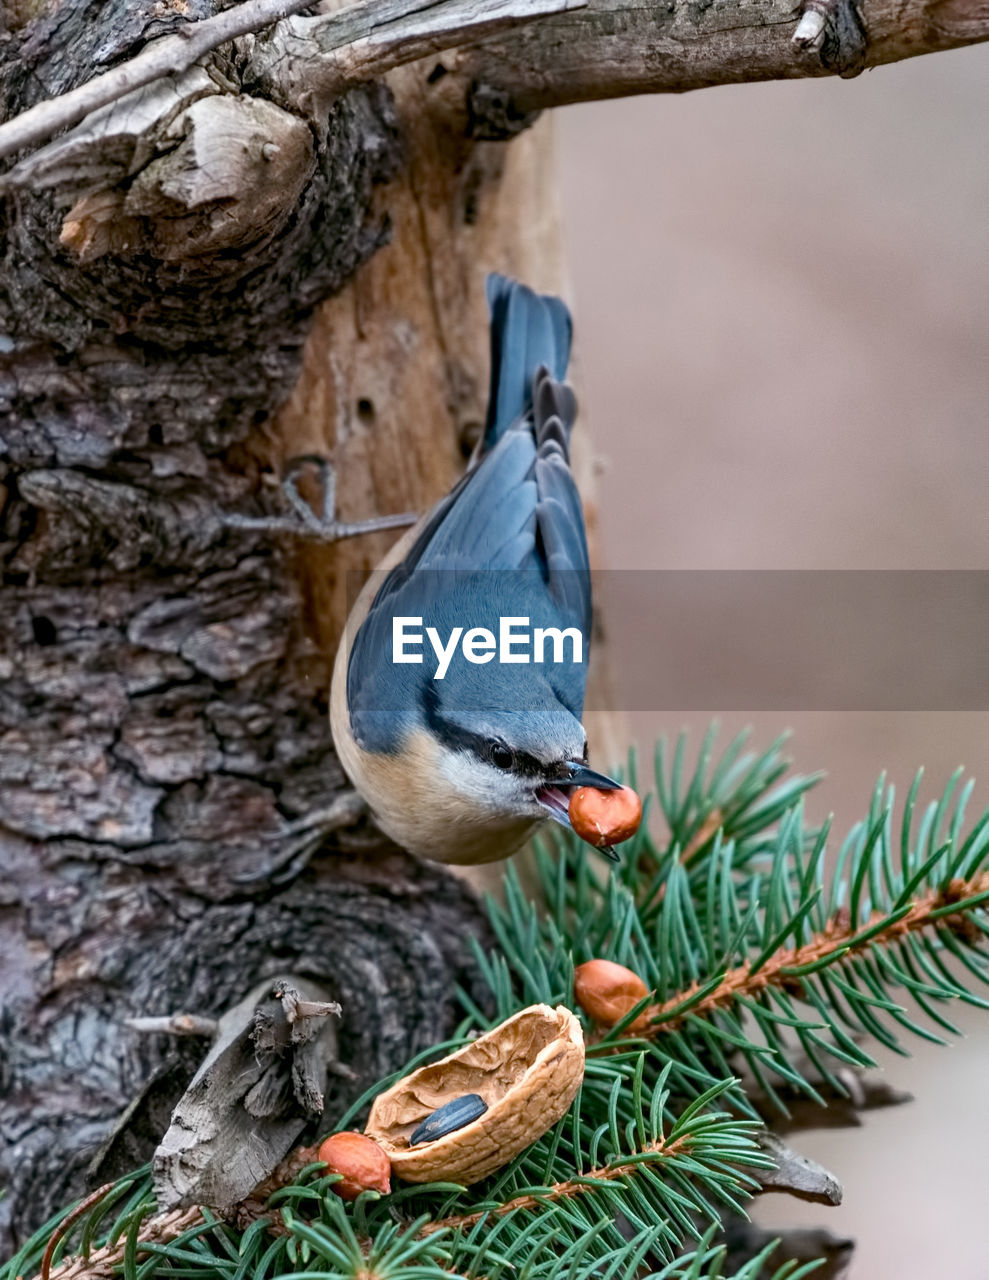 BIRD PERCHING ON TREE